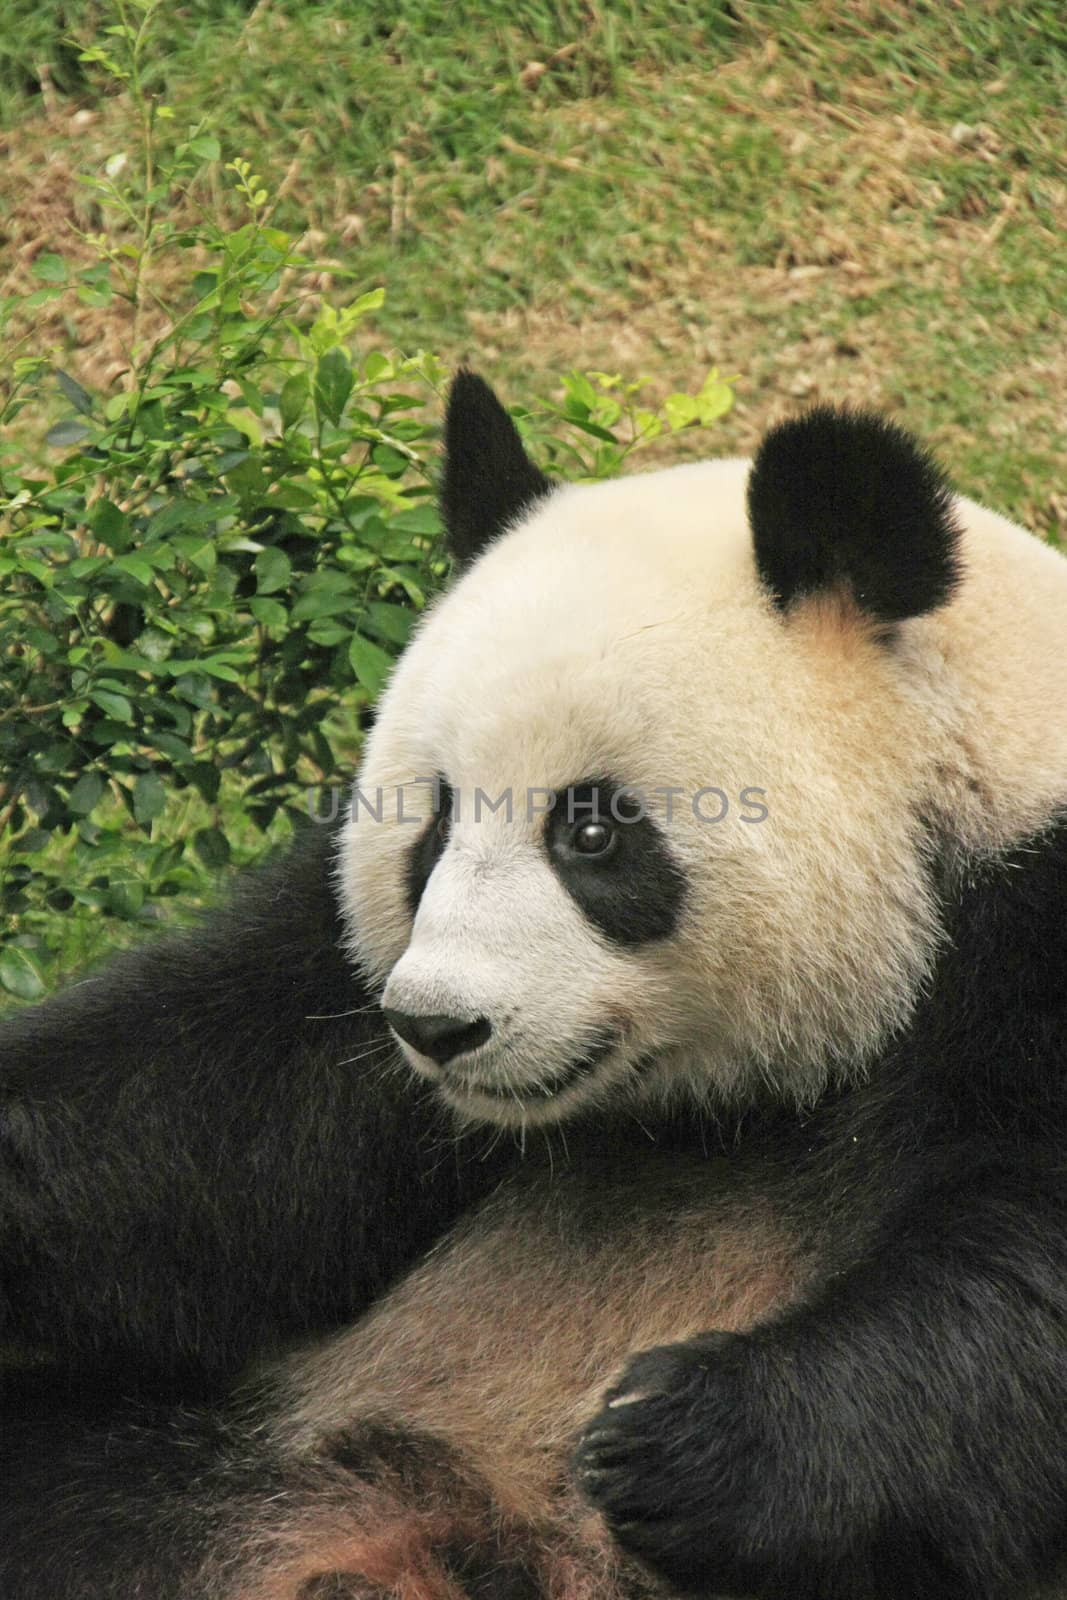 Portrait of giant panda bear (Ailuropoda Melanoleuca), China